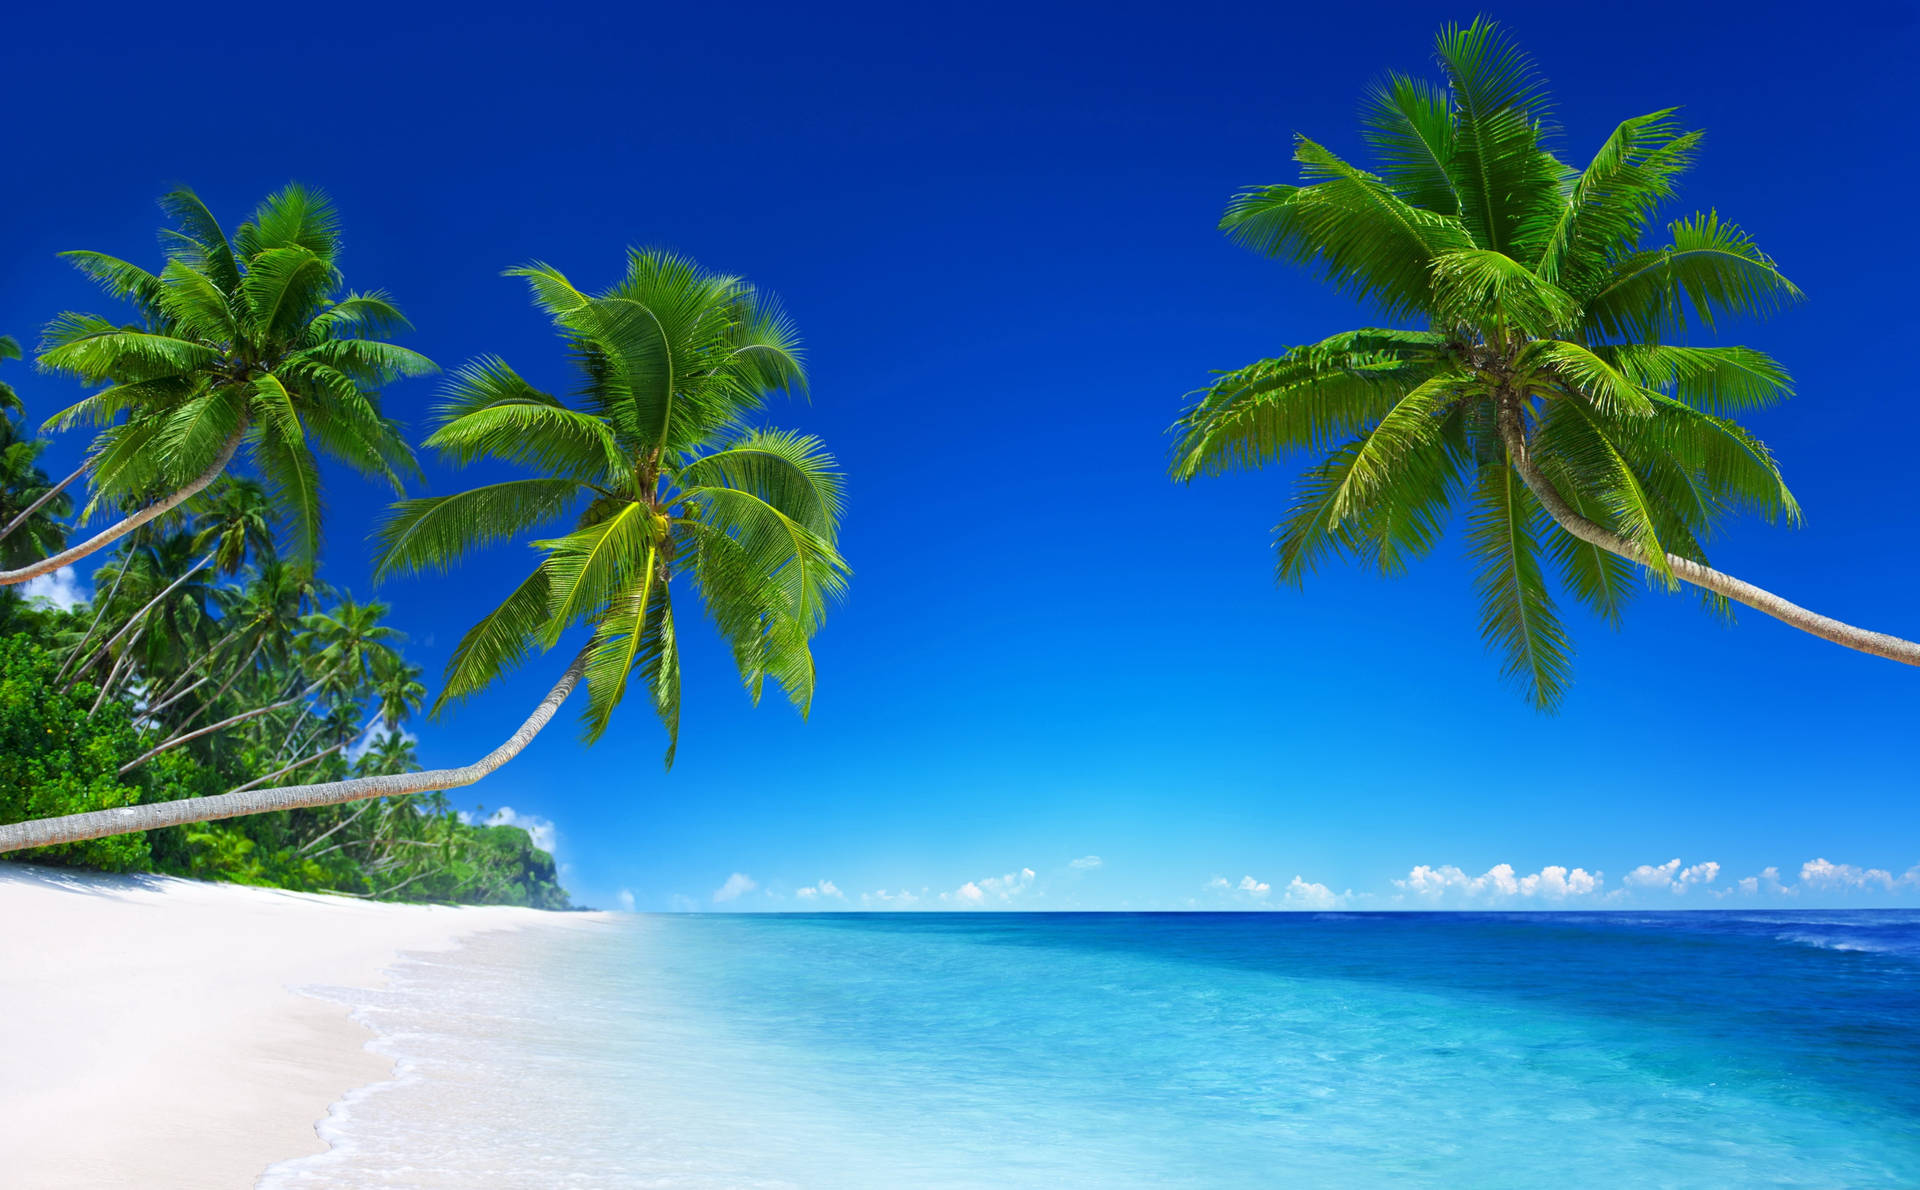 Leaning Coconut Trees Tropical Desktop Wallpaper